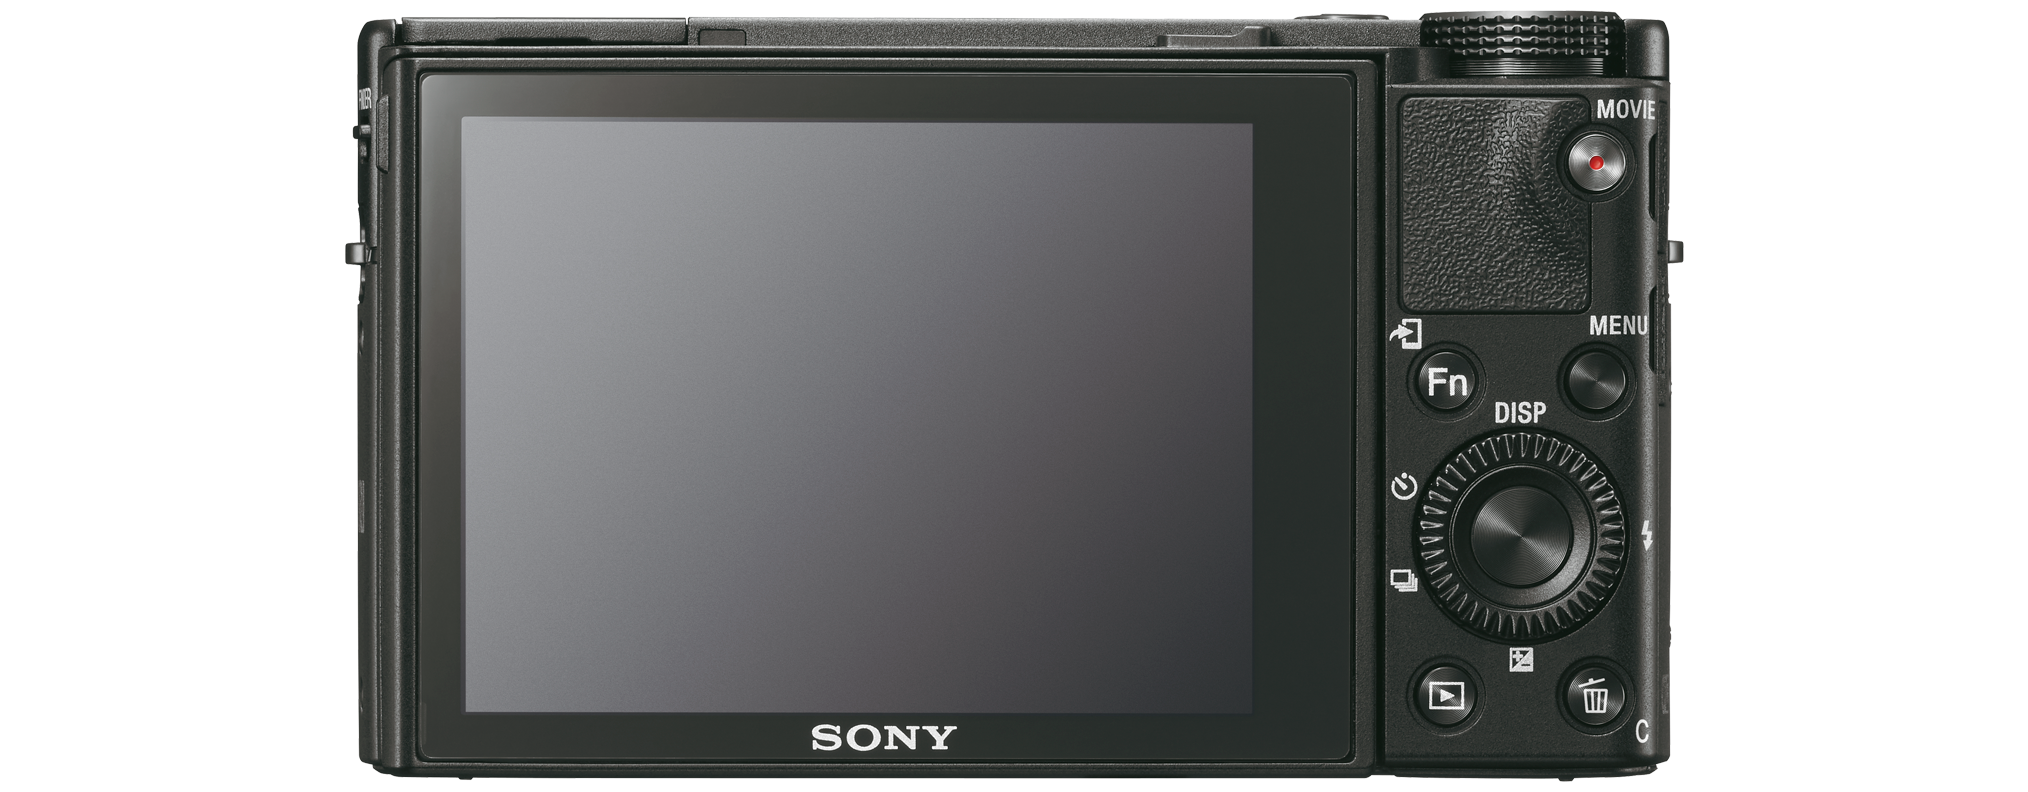 opt. Fine/TFT-LCD, VA Digitalkamera Zeiss 2.9x SONY DSC-RX100 WLAN NFC , Zoom, Cyber-shot Schwarz, Xtra